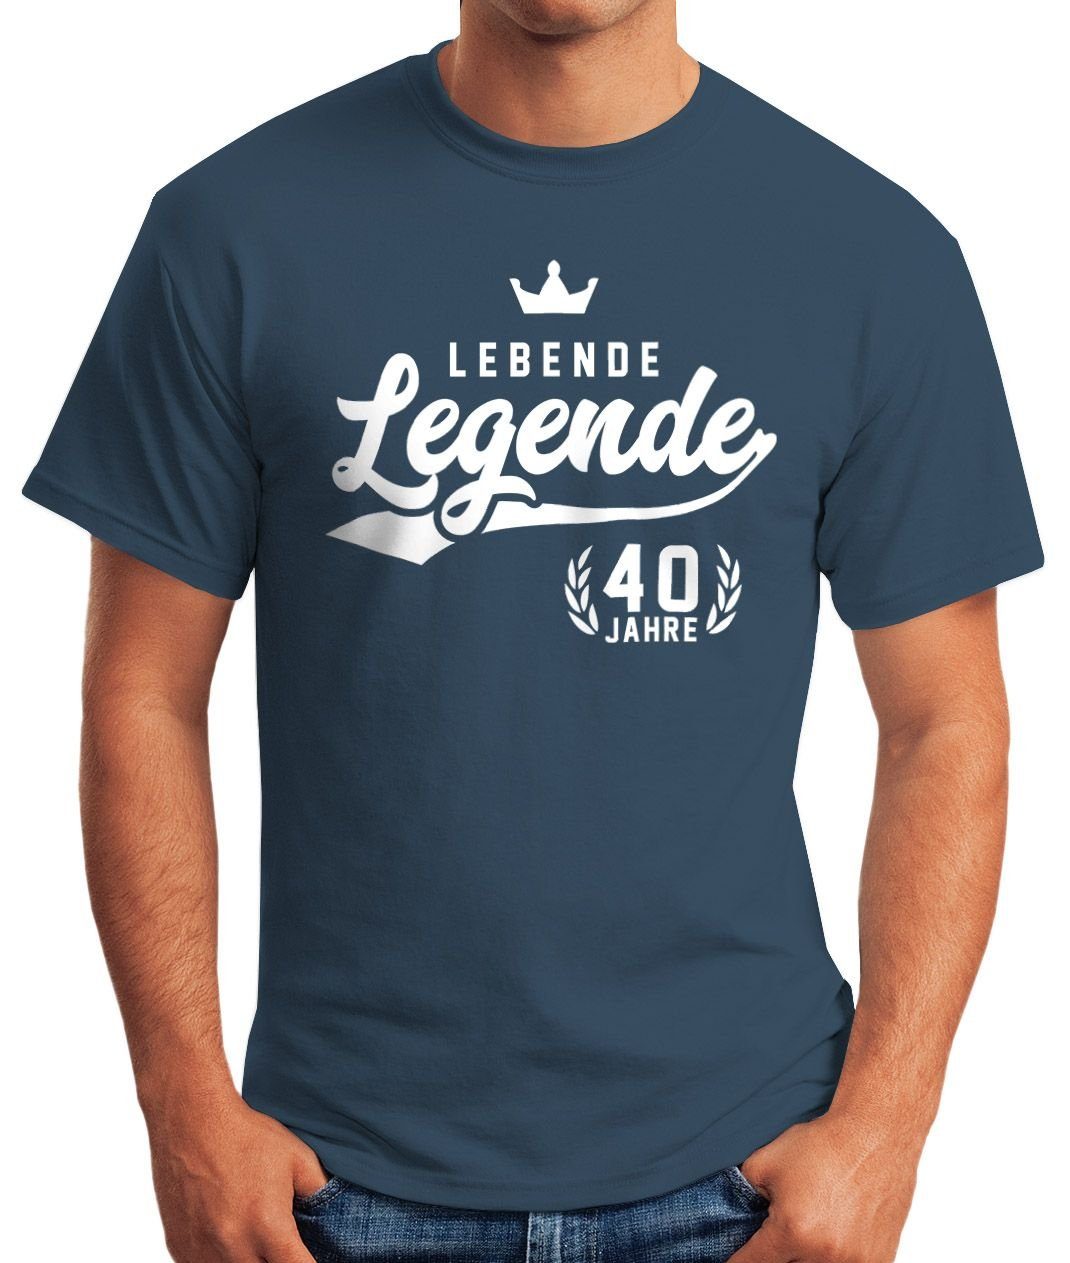 MoonWorks Print-Shirt Krone blau Geburtstag 40 Fun-Shirt [object Object]. Athletic Herren mit Print Lebende T-Shirt Legende Moonworks®